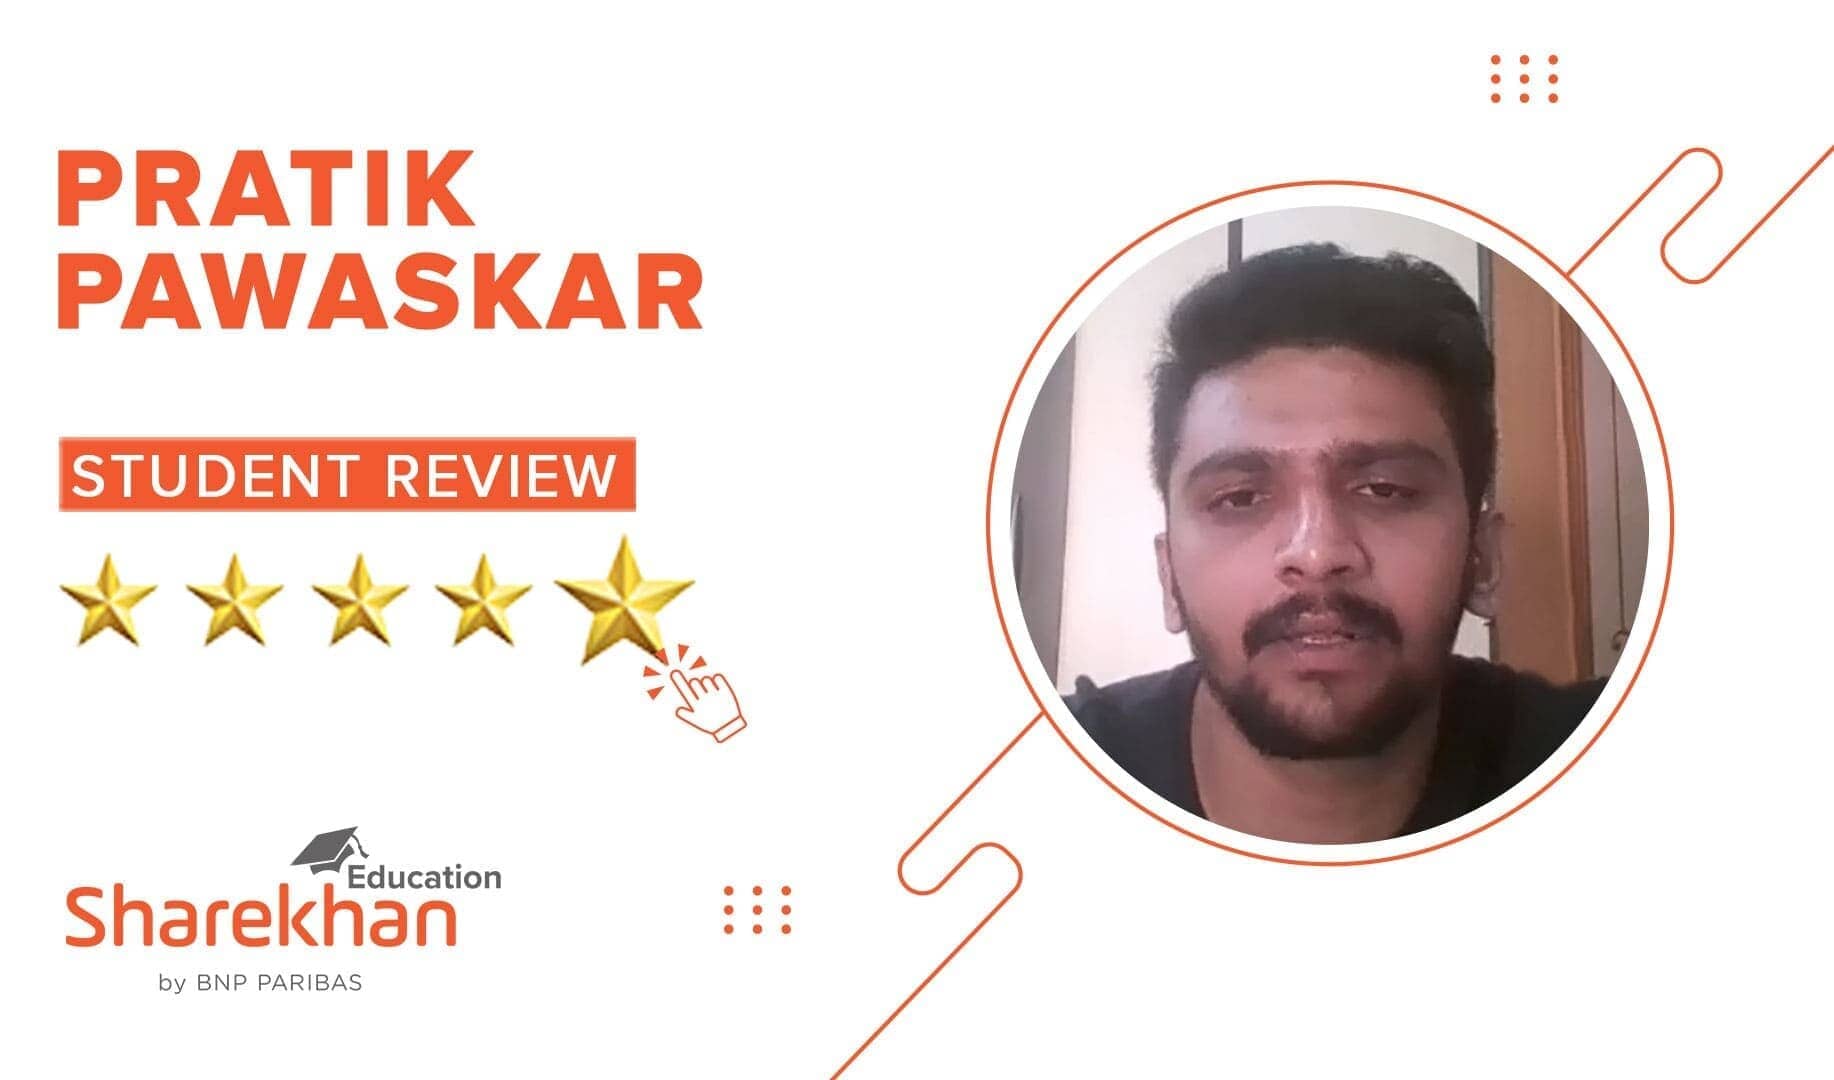 Sharekhan Education Review by Pratic Pawaskar